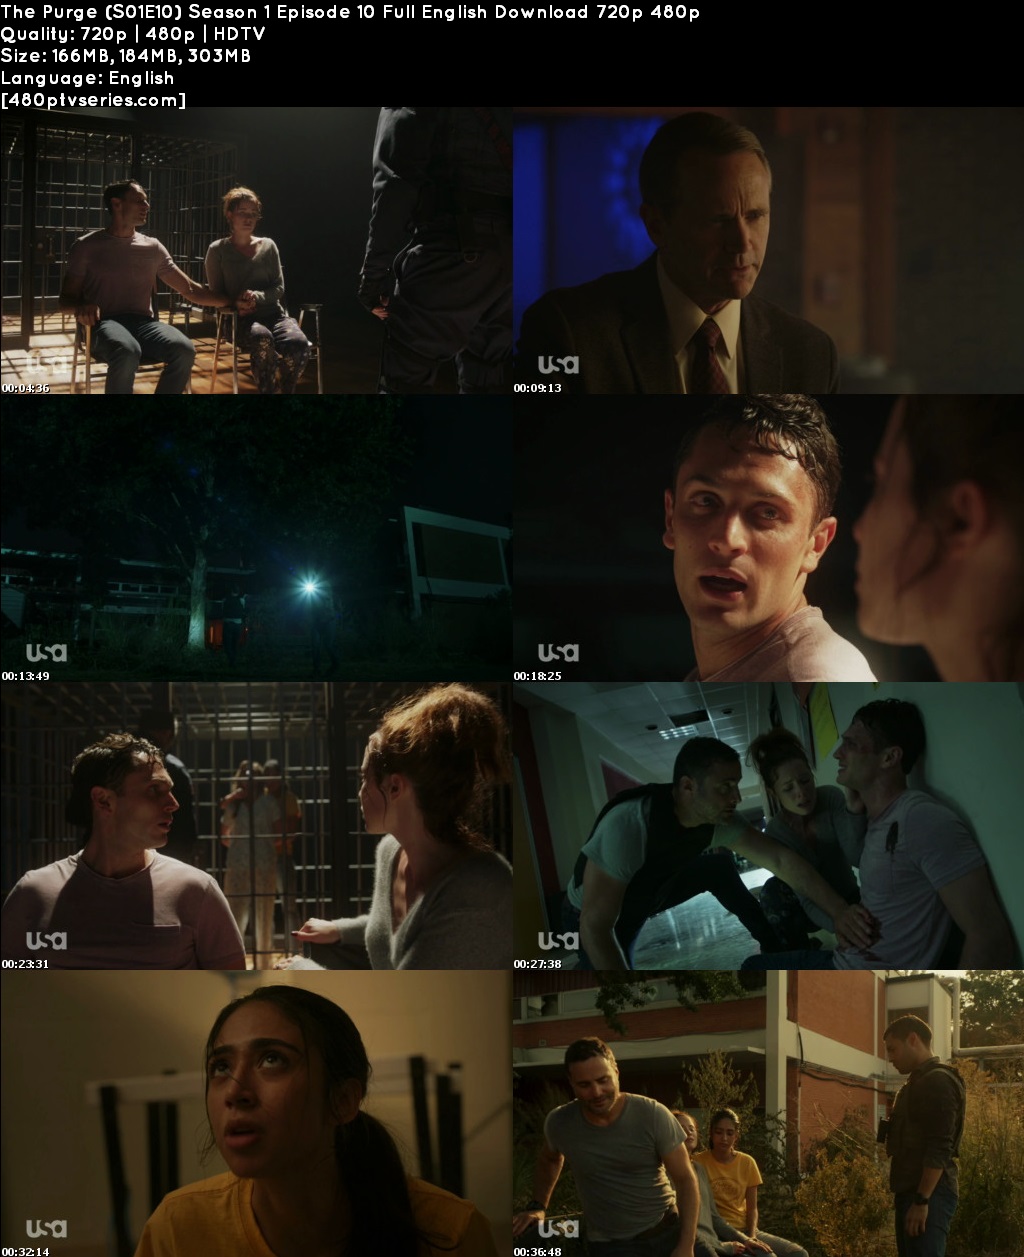 The Purge (S01E10) Season 1 Episode 10 Full English Download 720p 480p